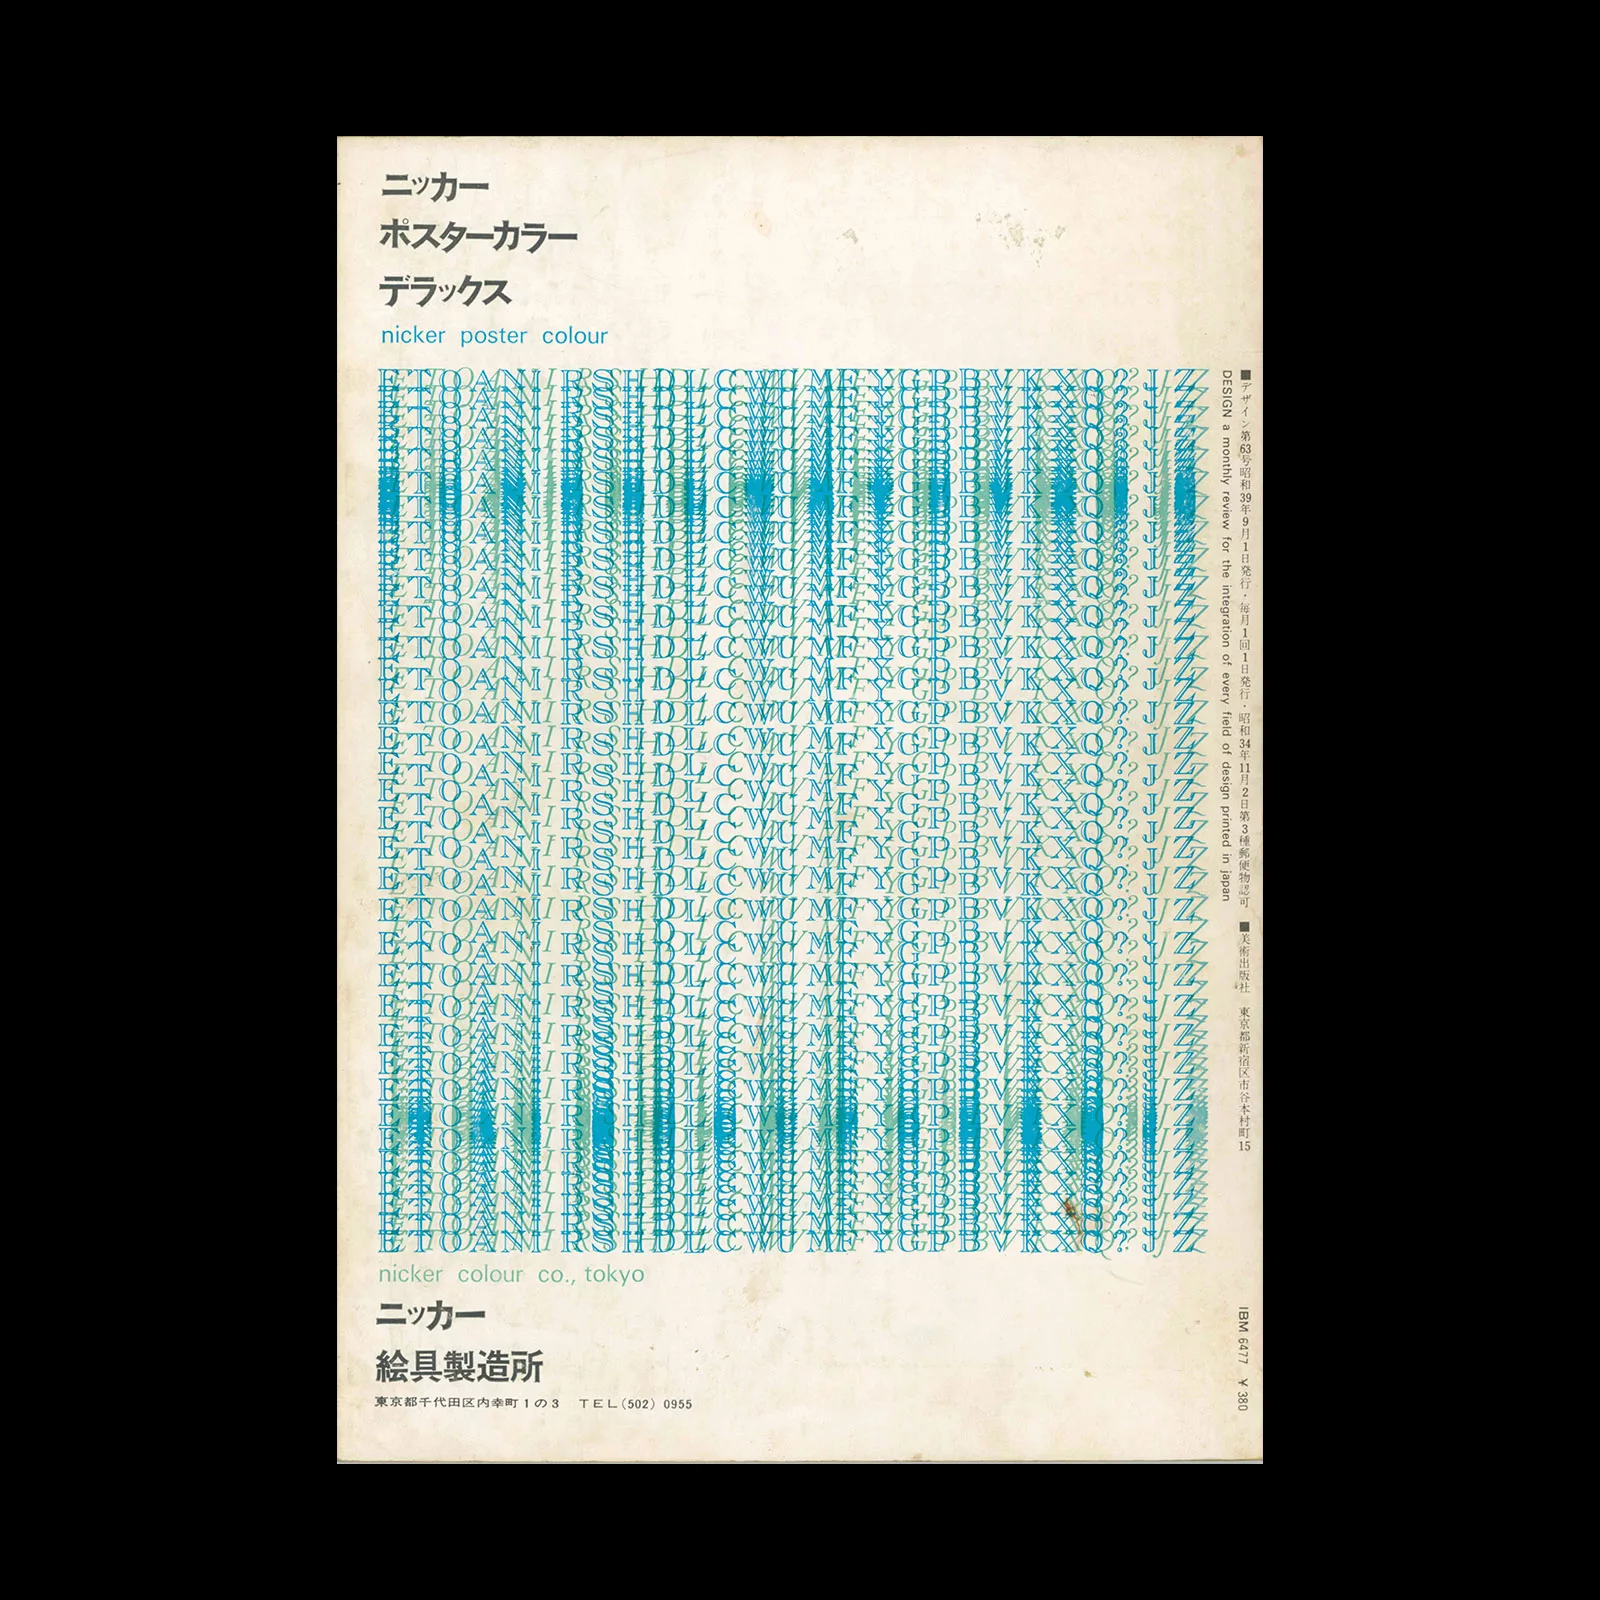 Design (Japan), 63, 1964. Cover design by Kohei Sugiura